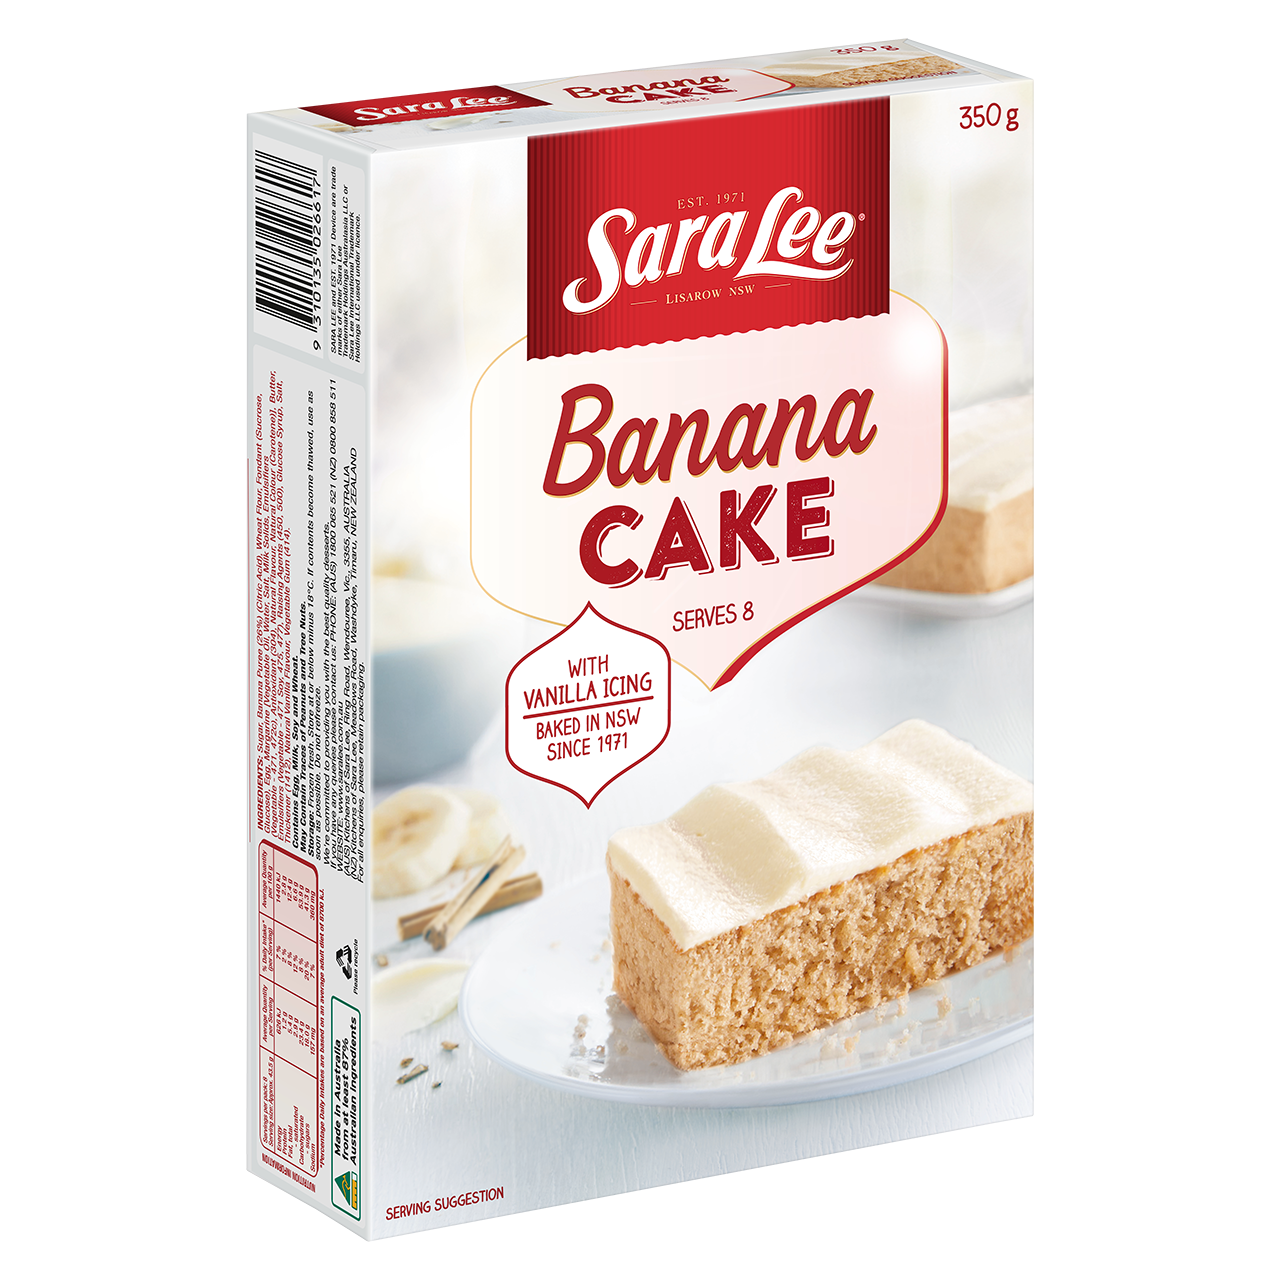 Danishes, Cakes & Bakery - Sara Lee